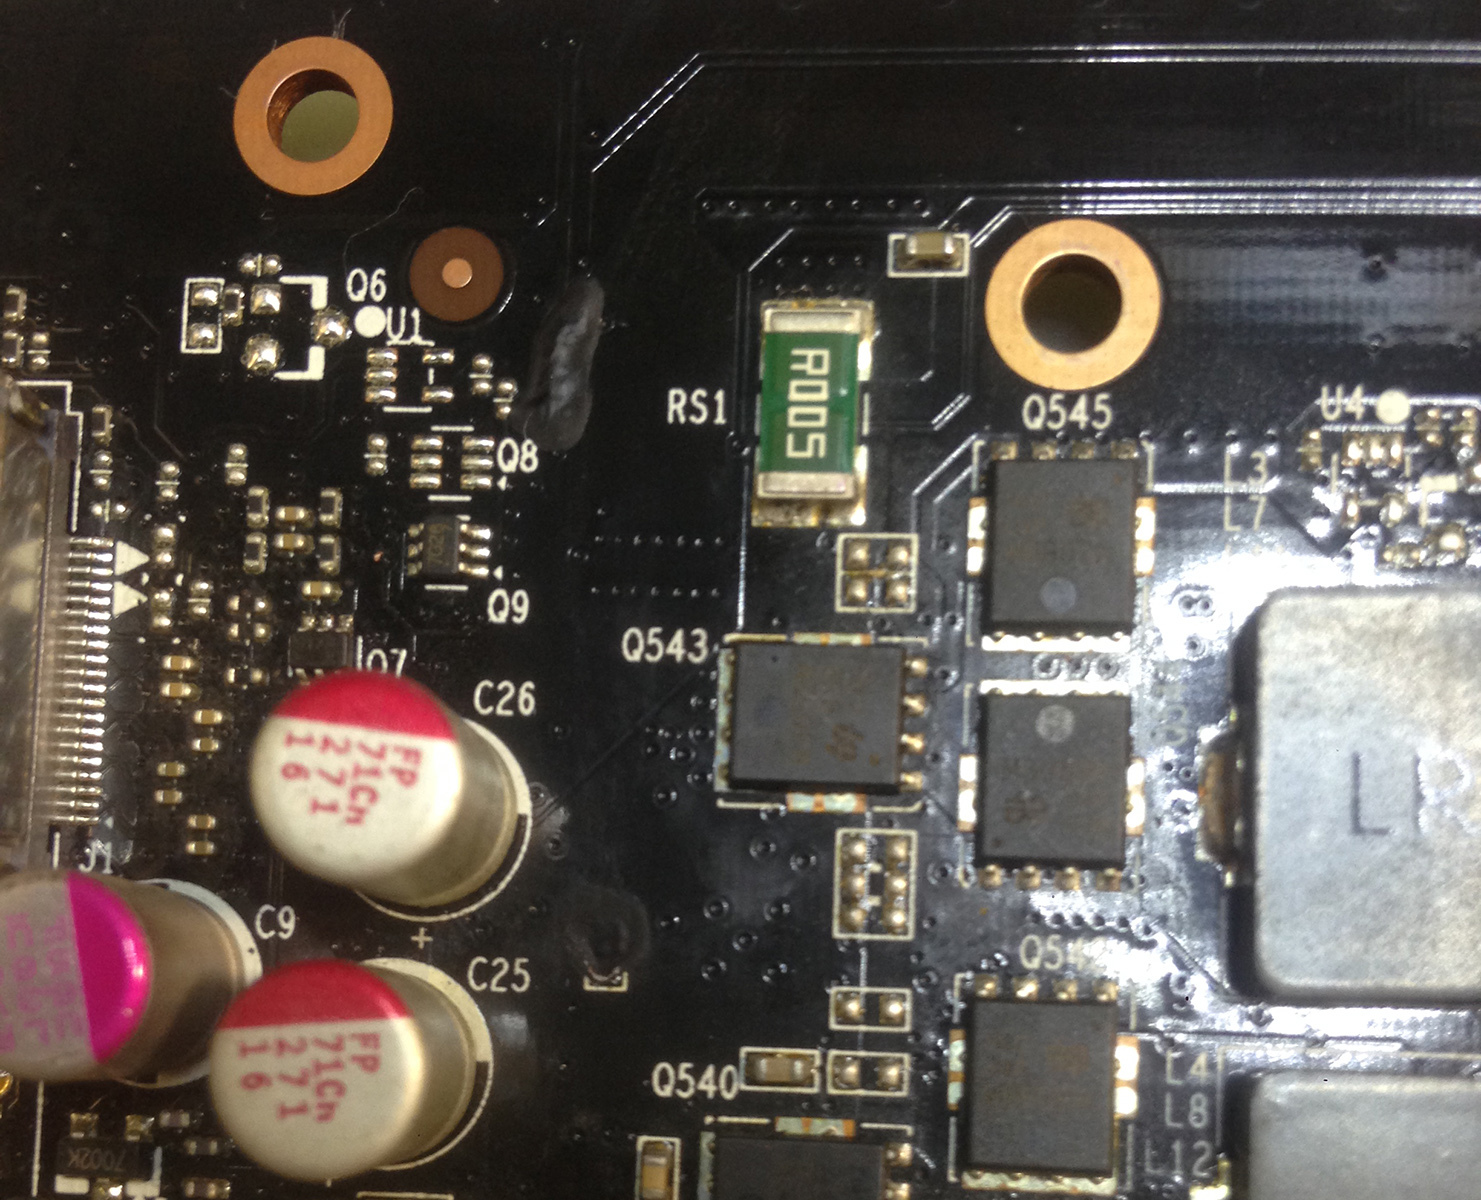 Repair of Inno3D GTX1060 6GB video card after specialists - My, Repair of equipment, Video card, Soldering, Micro soldering, Microscope, Diagnostics, Short circuit, Geforce GTX 1060, Inno3d, Burnouts, Service center, Repair, Longpost